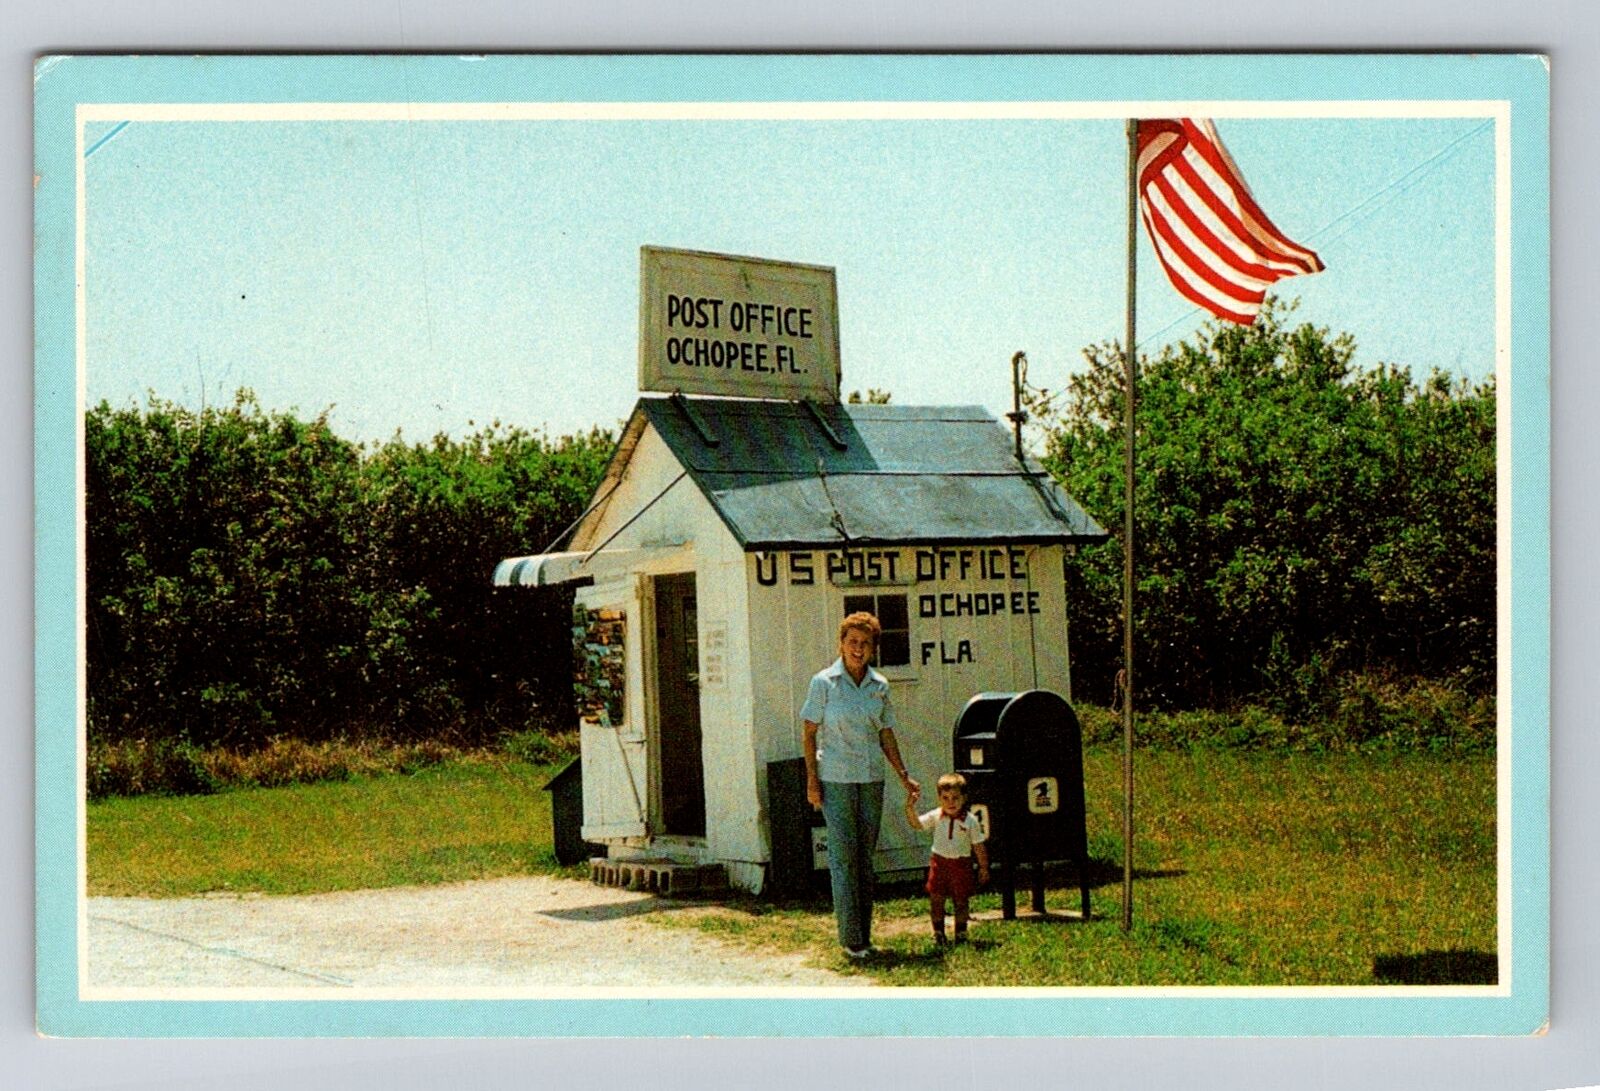 Ochopee FL-Florida, Smallest Post Office Building in U.S, Vintage Postcard